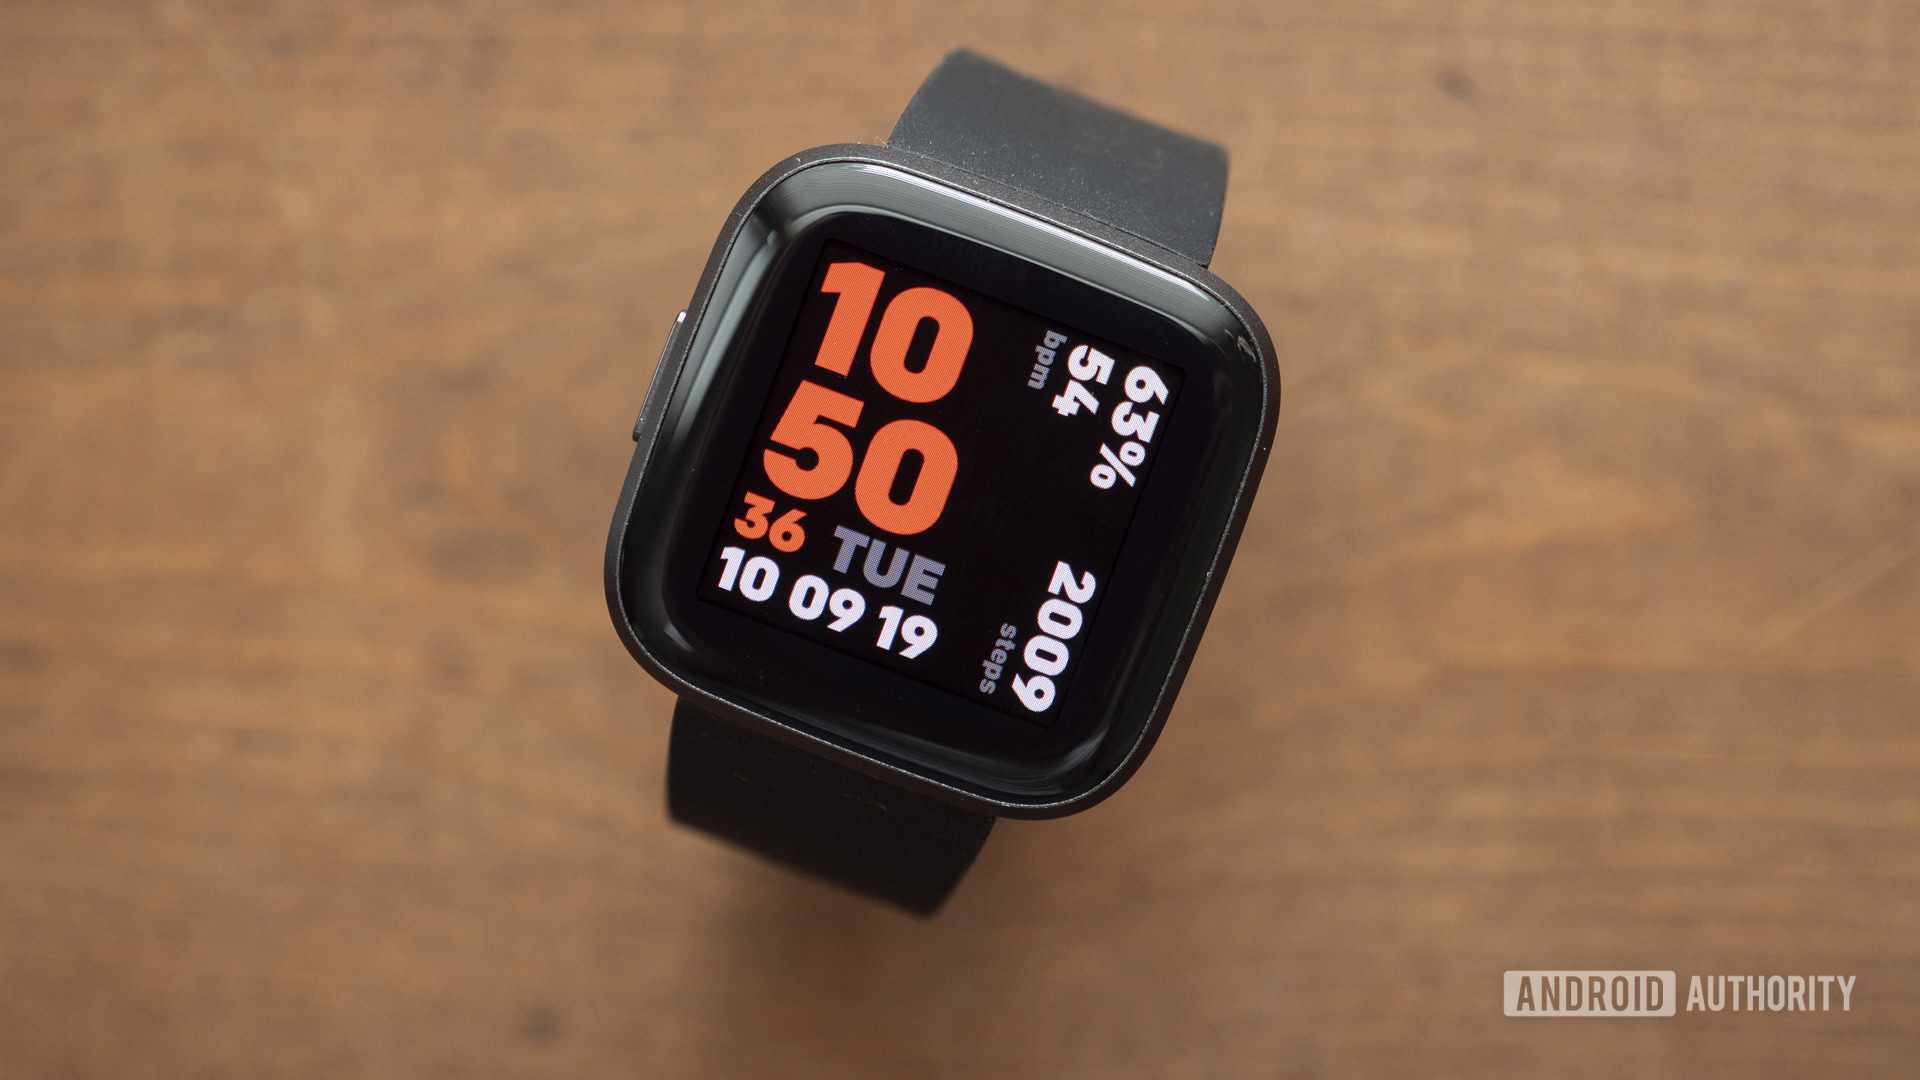 Fitbit Versa 2 review: Way behind Apple Watch